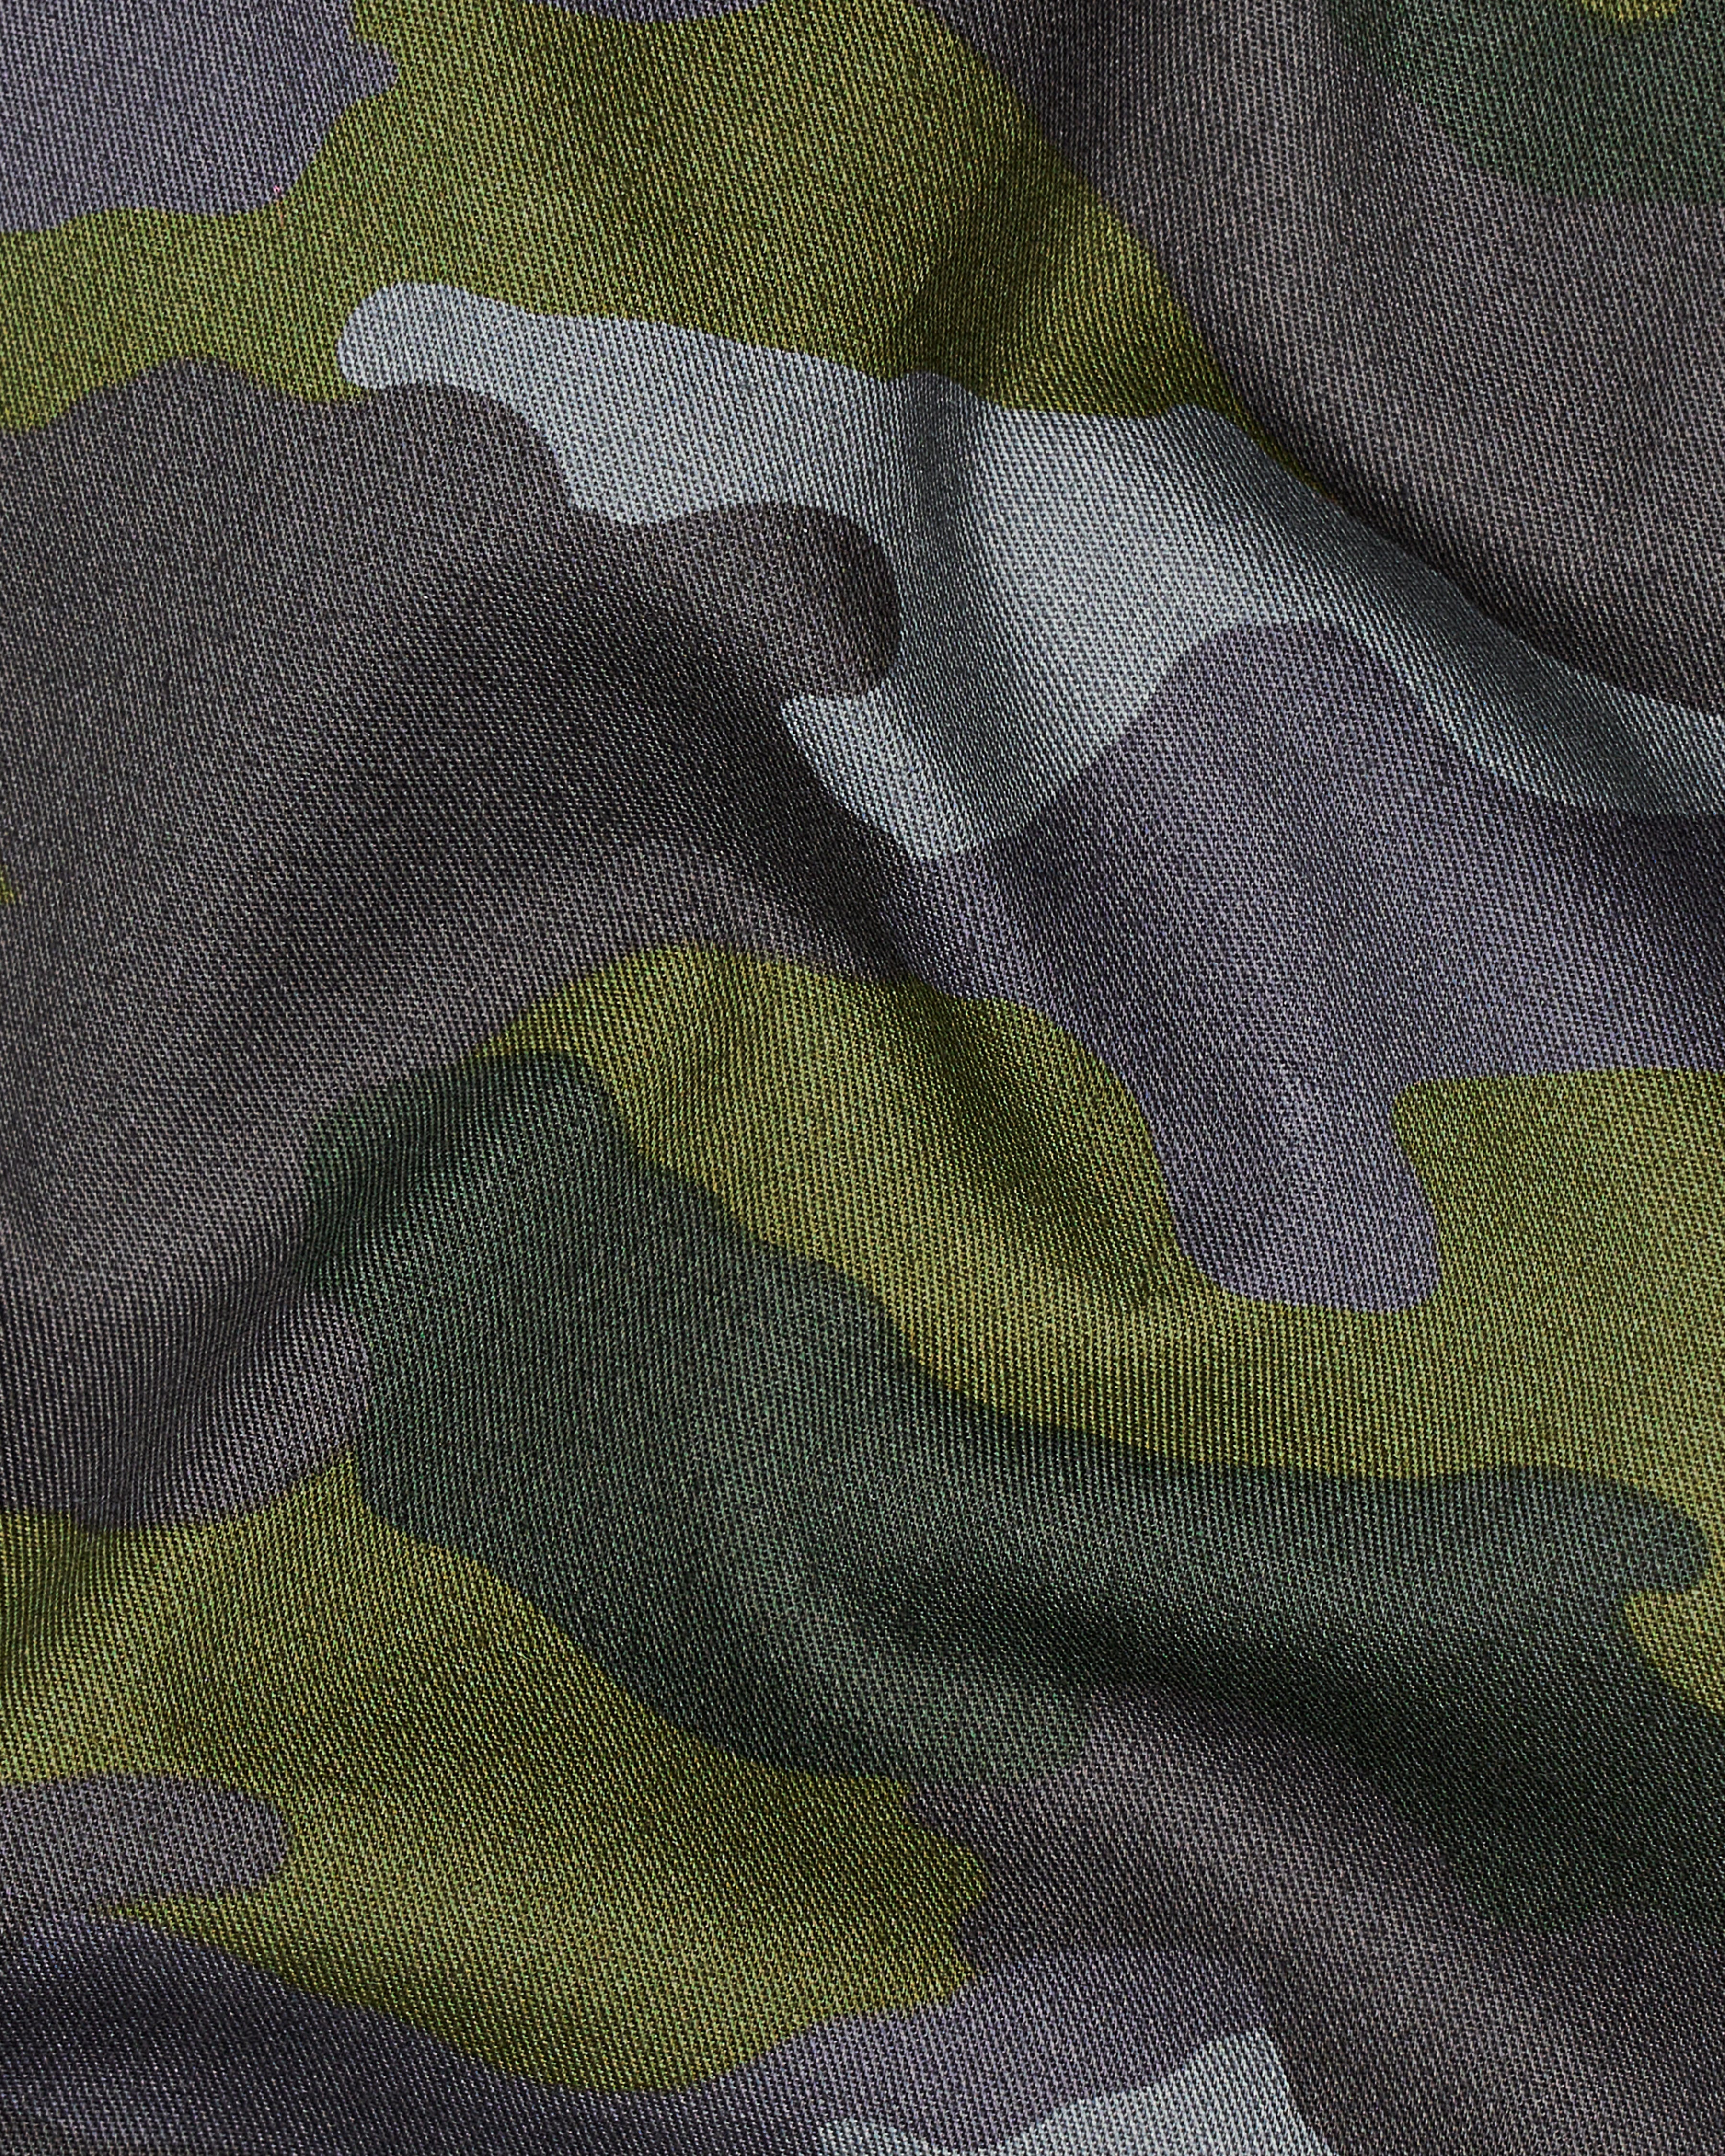 Gravel Gray with Hemlock Green Camouflage Printed Royal Oxford Shirt 8921-BD-MB-38, 8921-BD-MB-H-38,  8921-BD-MB-39,  8921-BD-MB-H-39,  8921-BD-MB-40,  8921-BD-MB-H-40,  8921-BD-MB-42,  8921-BD-MB-H-42,  8921-BD-MB-44,  8921-BD-MB-H-44,  8921-BD-MB-46,  8921-BD-MB-H-46,  8921-BD-MB-48,  8921-BD-MB-H-48,  8921-BD-MB-50,  8921-BD-MB-H-50,  8921-BD-MB-52,  8921-BD-MB-H-52